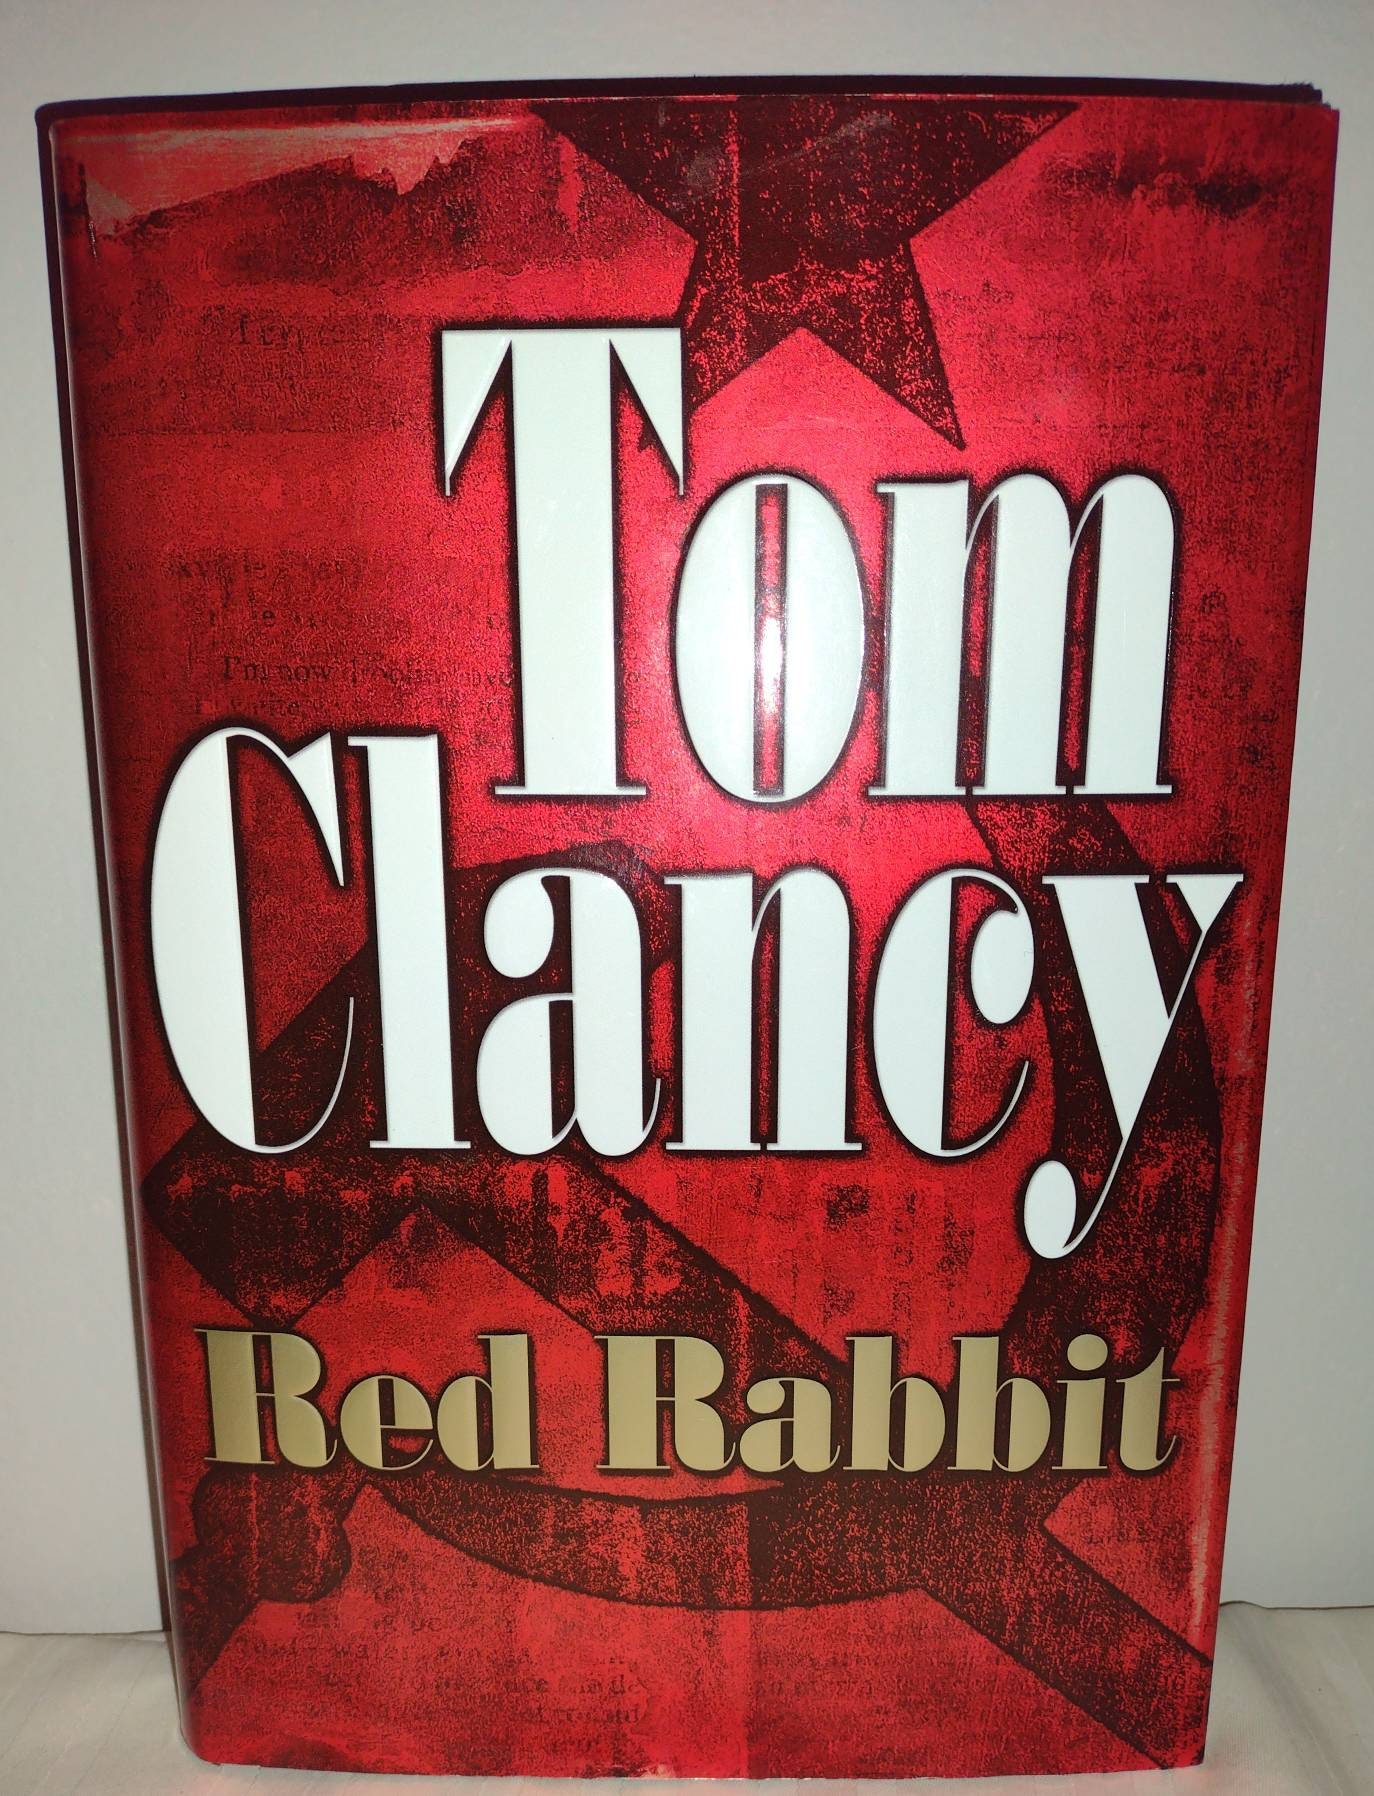 Repræsentere inaktive Se igennem Tom Clancy1947-2013 red Rabbit 1st Edition - Etsy